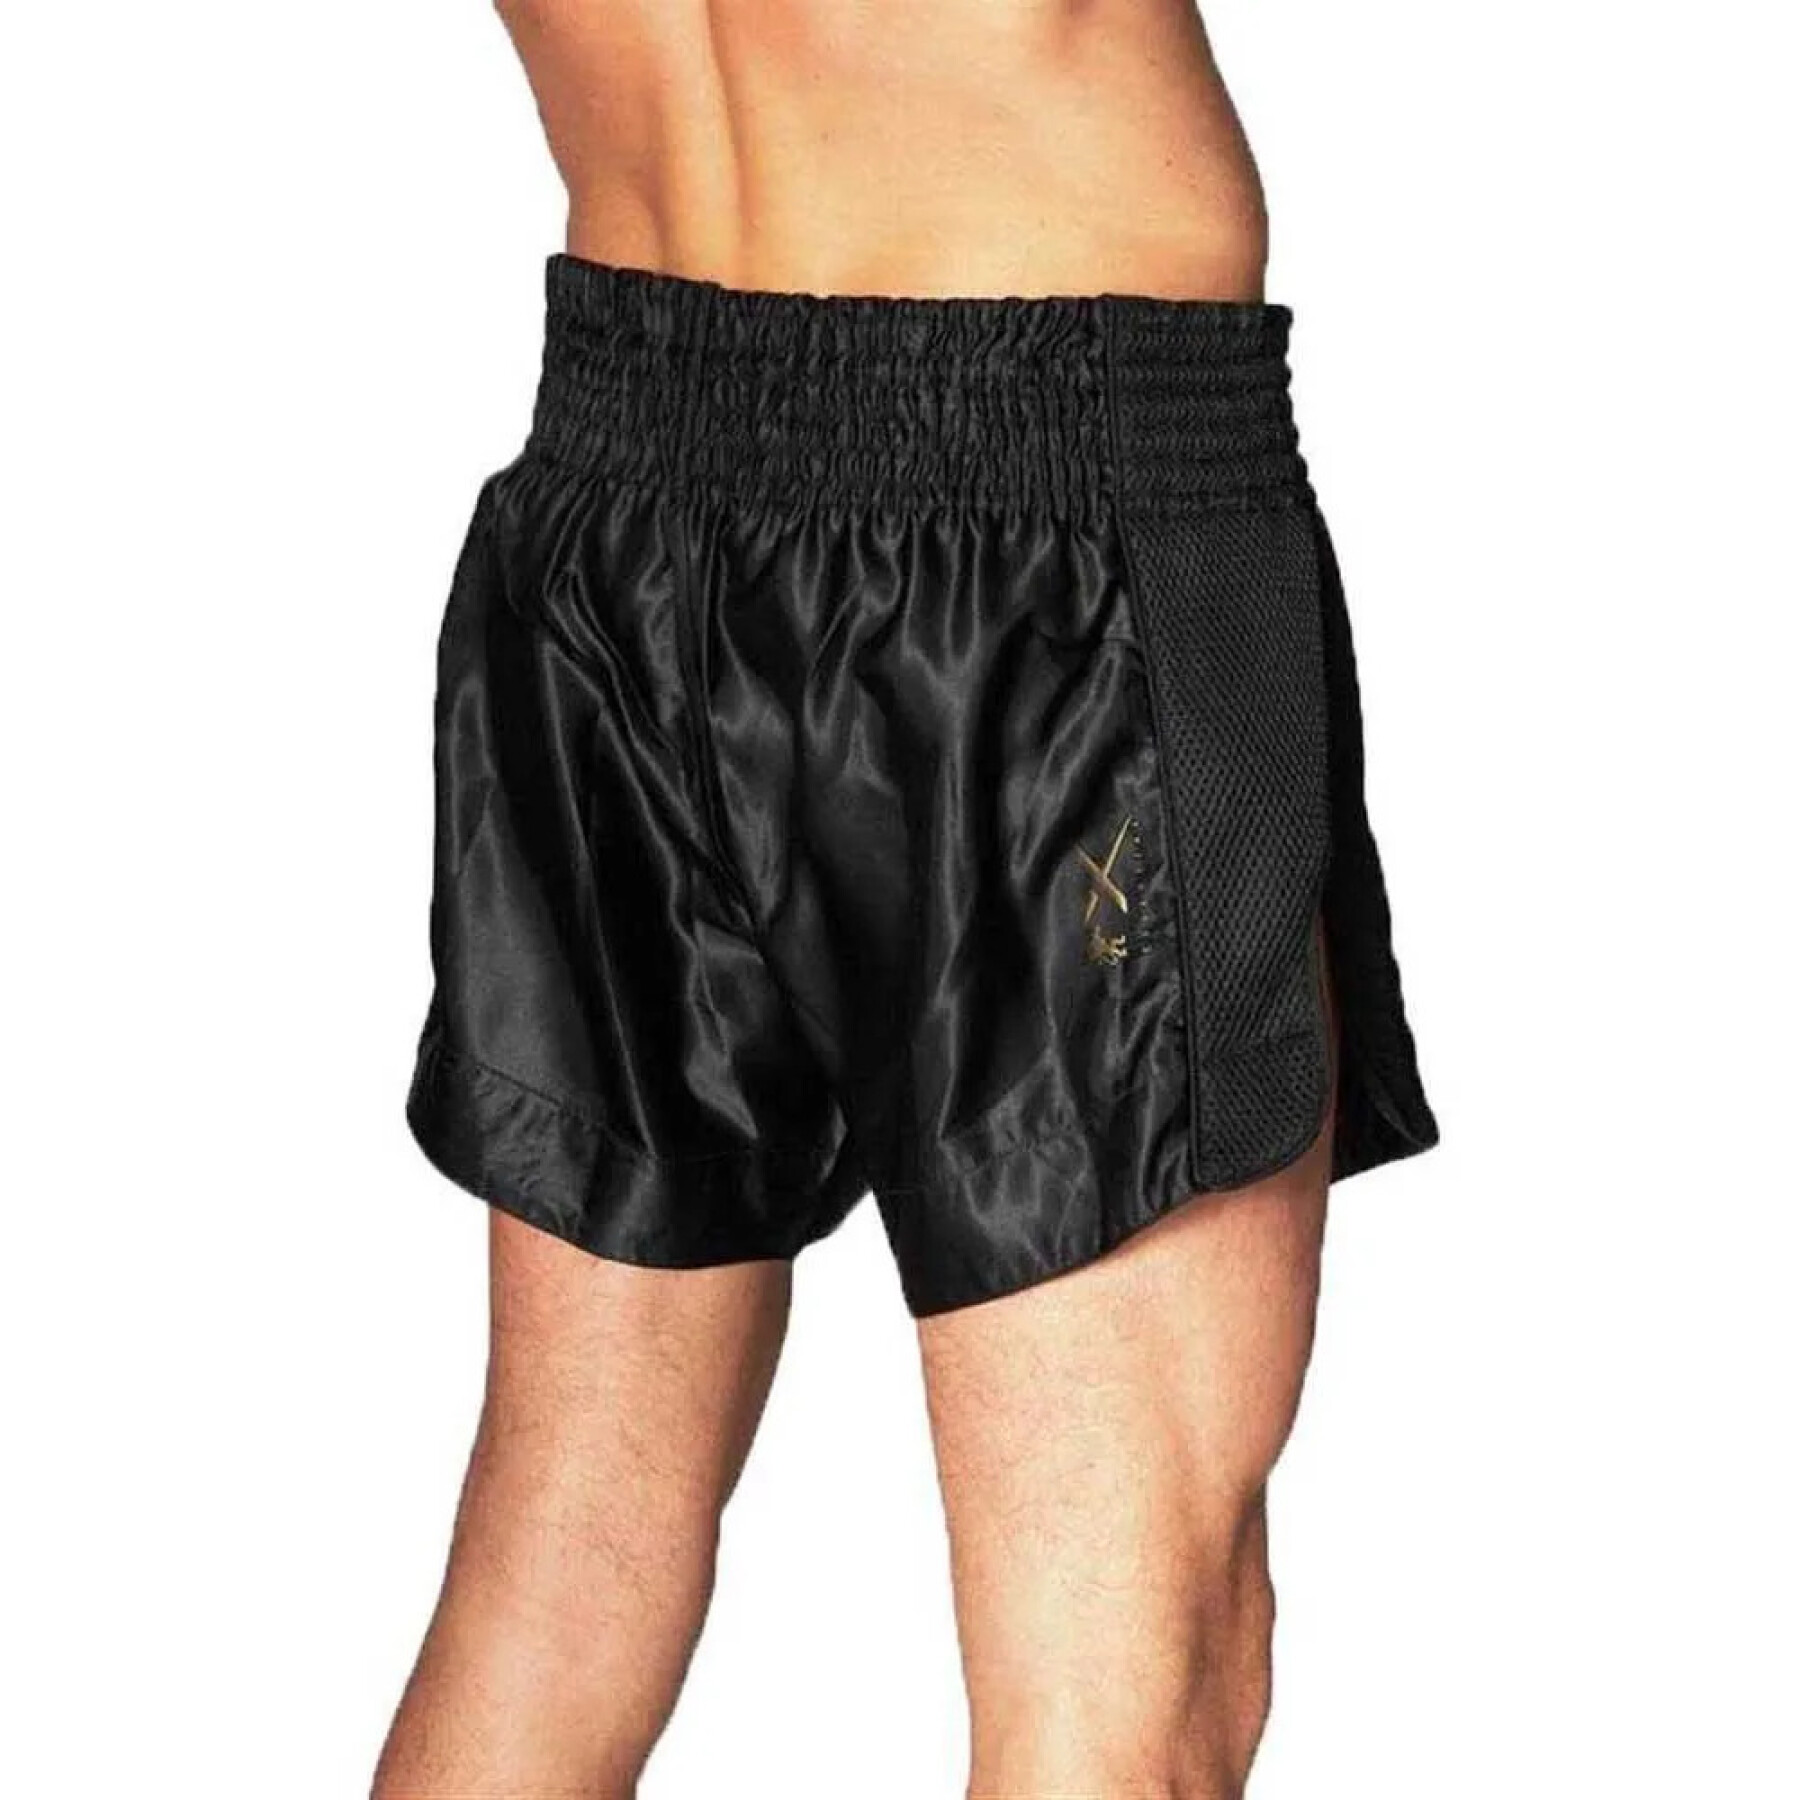 Pantaloncini boxe Leone kick thai essential